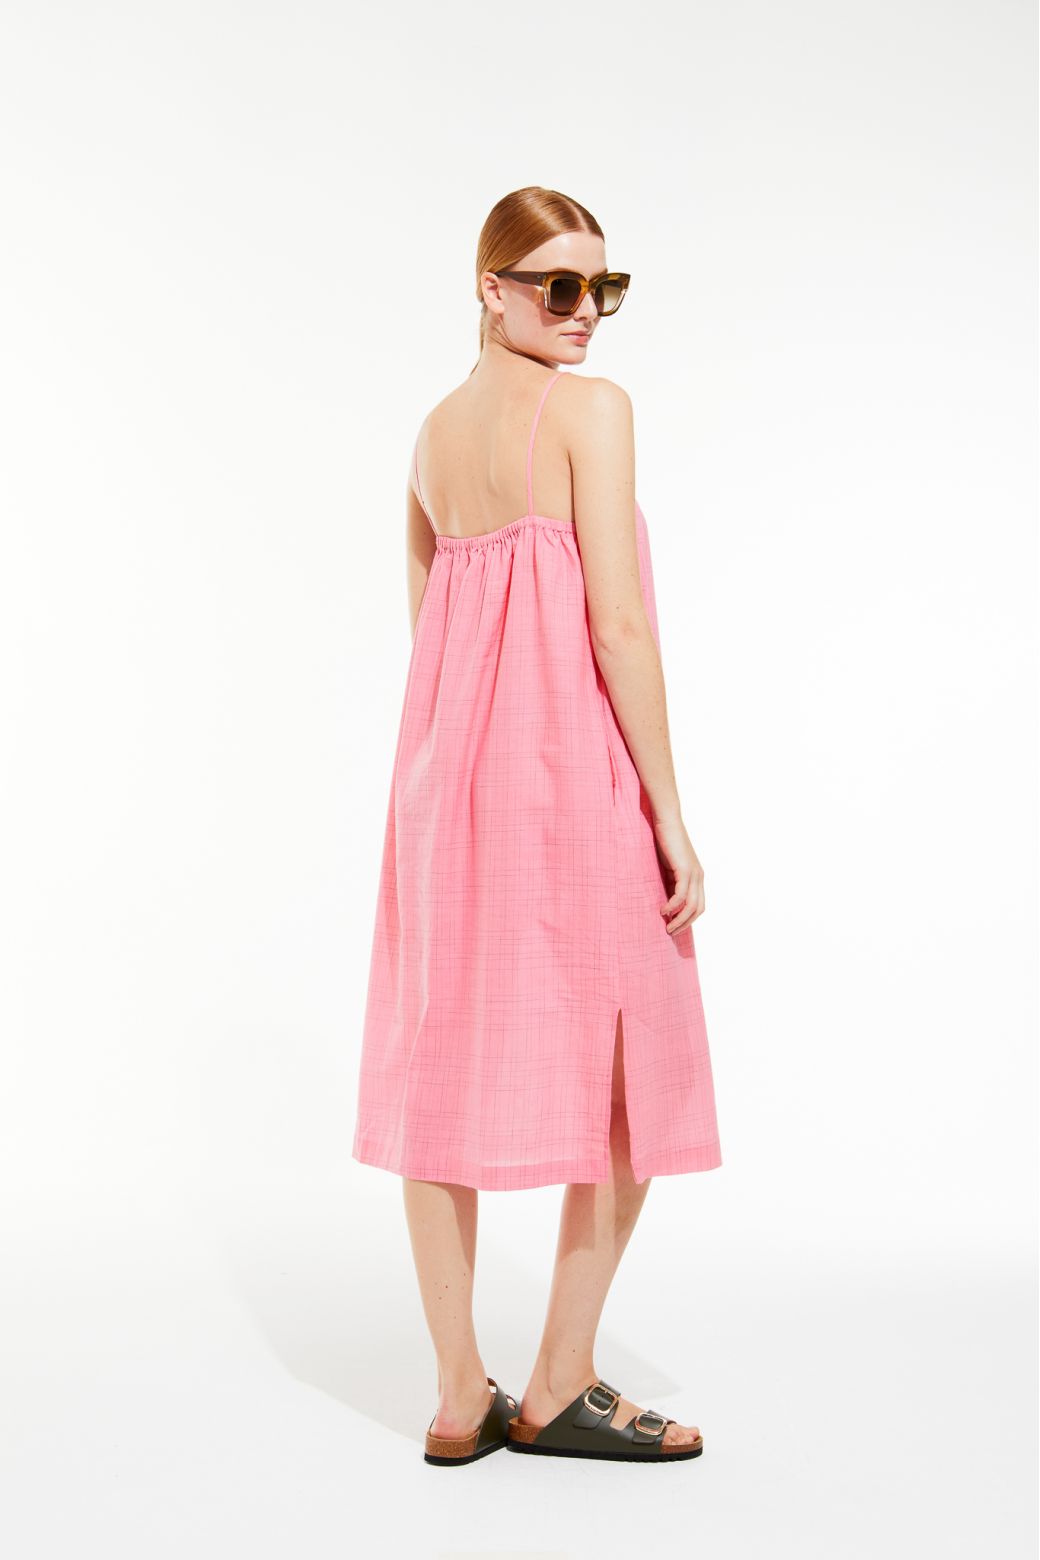 Bright Pink Joy Nacre Dress